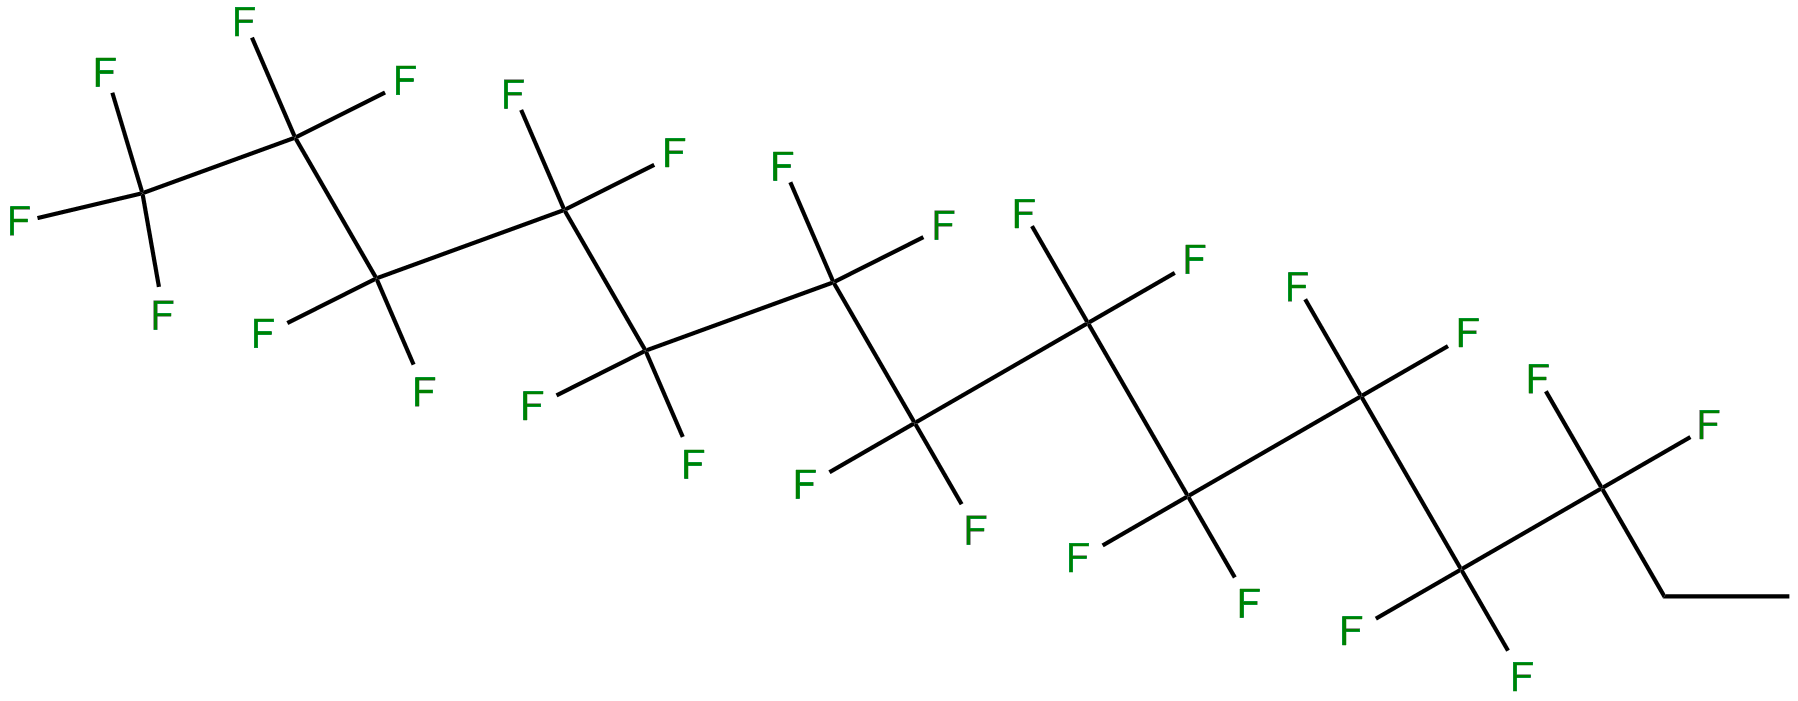 Image of 1,1,1,2,2,3,3,4,4,5,5,6,6,7,7,8,8,9,9,10,10,11,11,12,12-pentacosafluorotetradecane